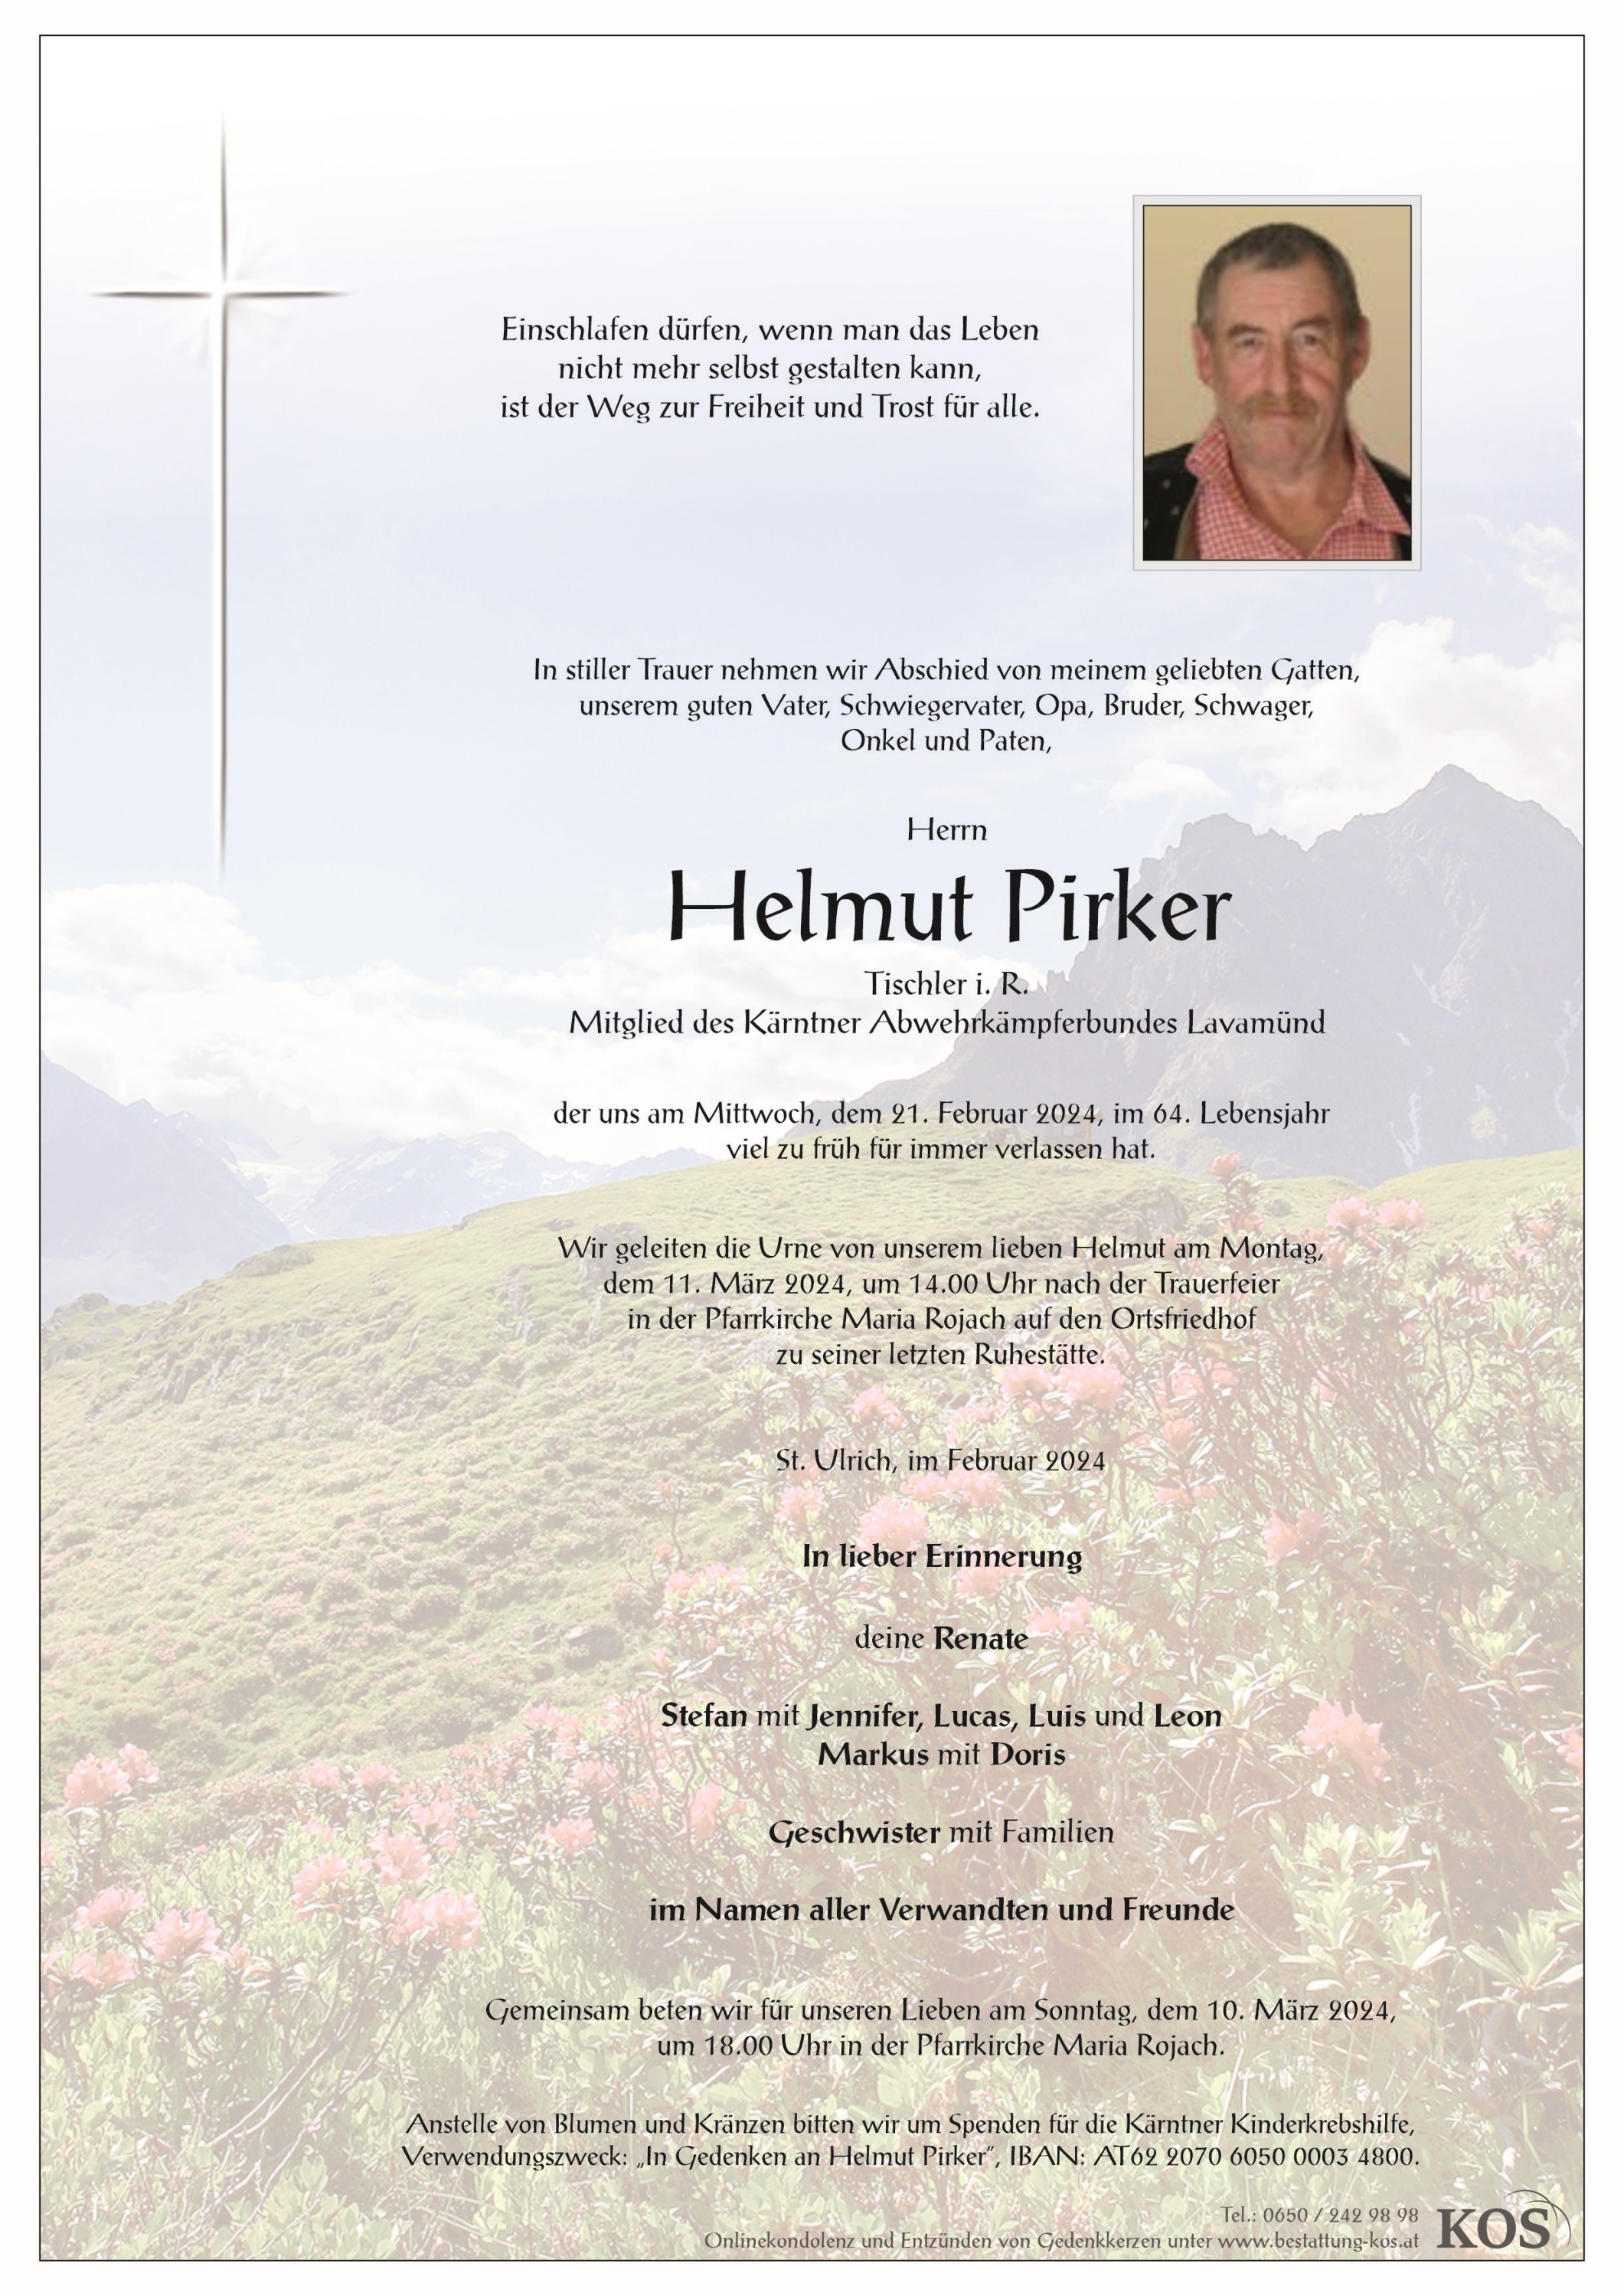 Helmut Pirker